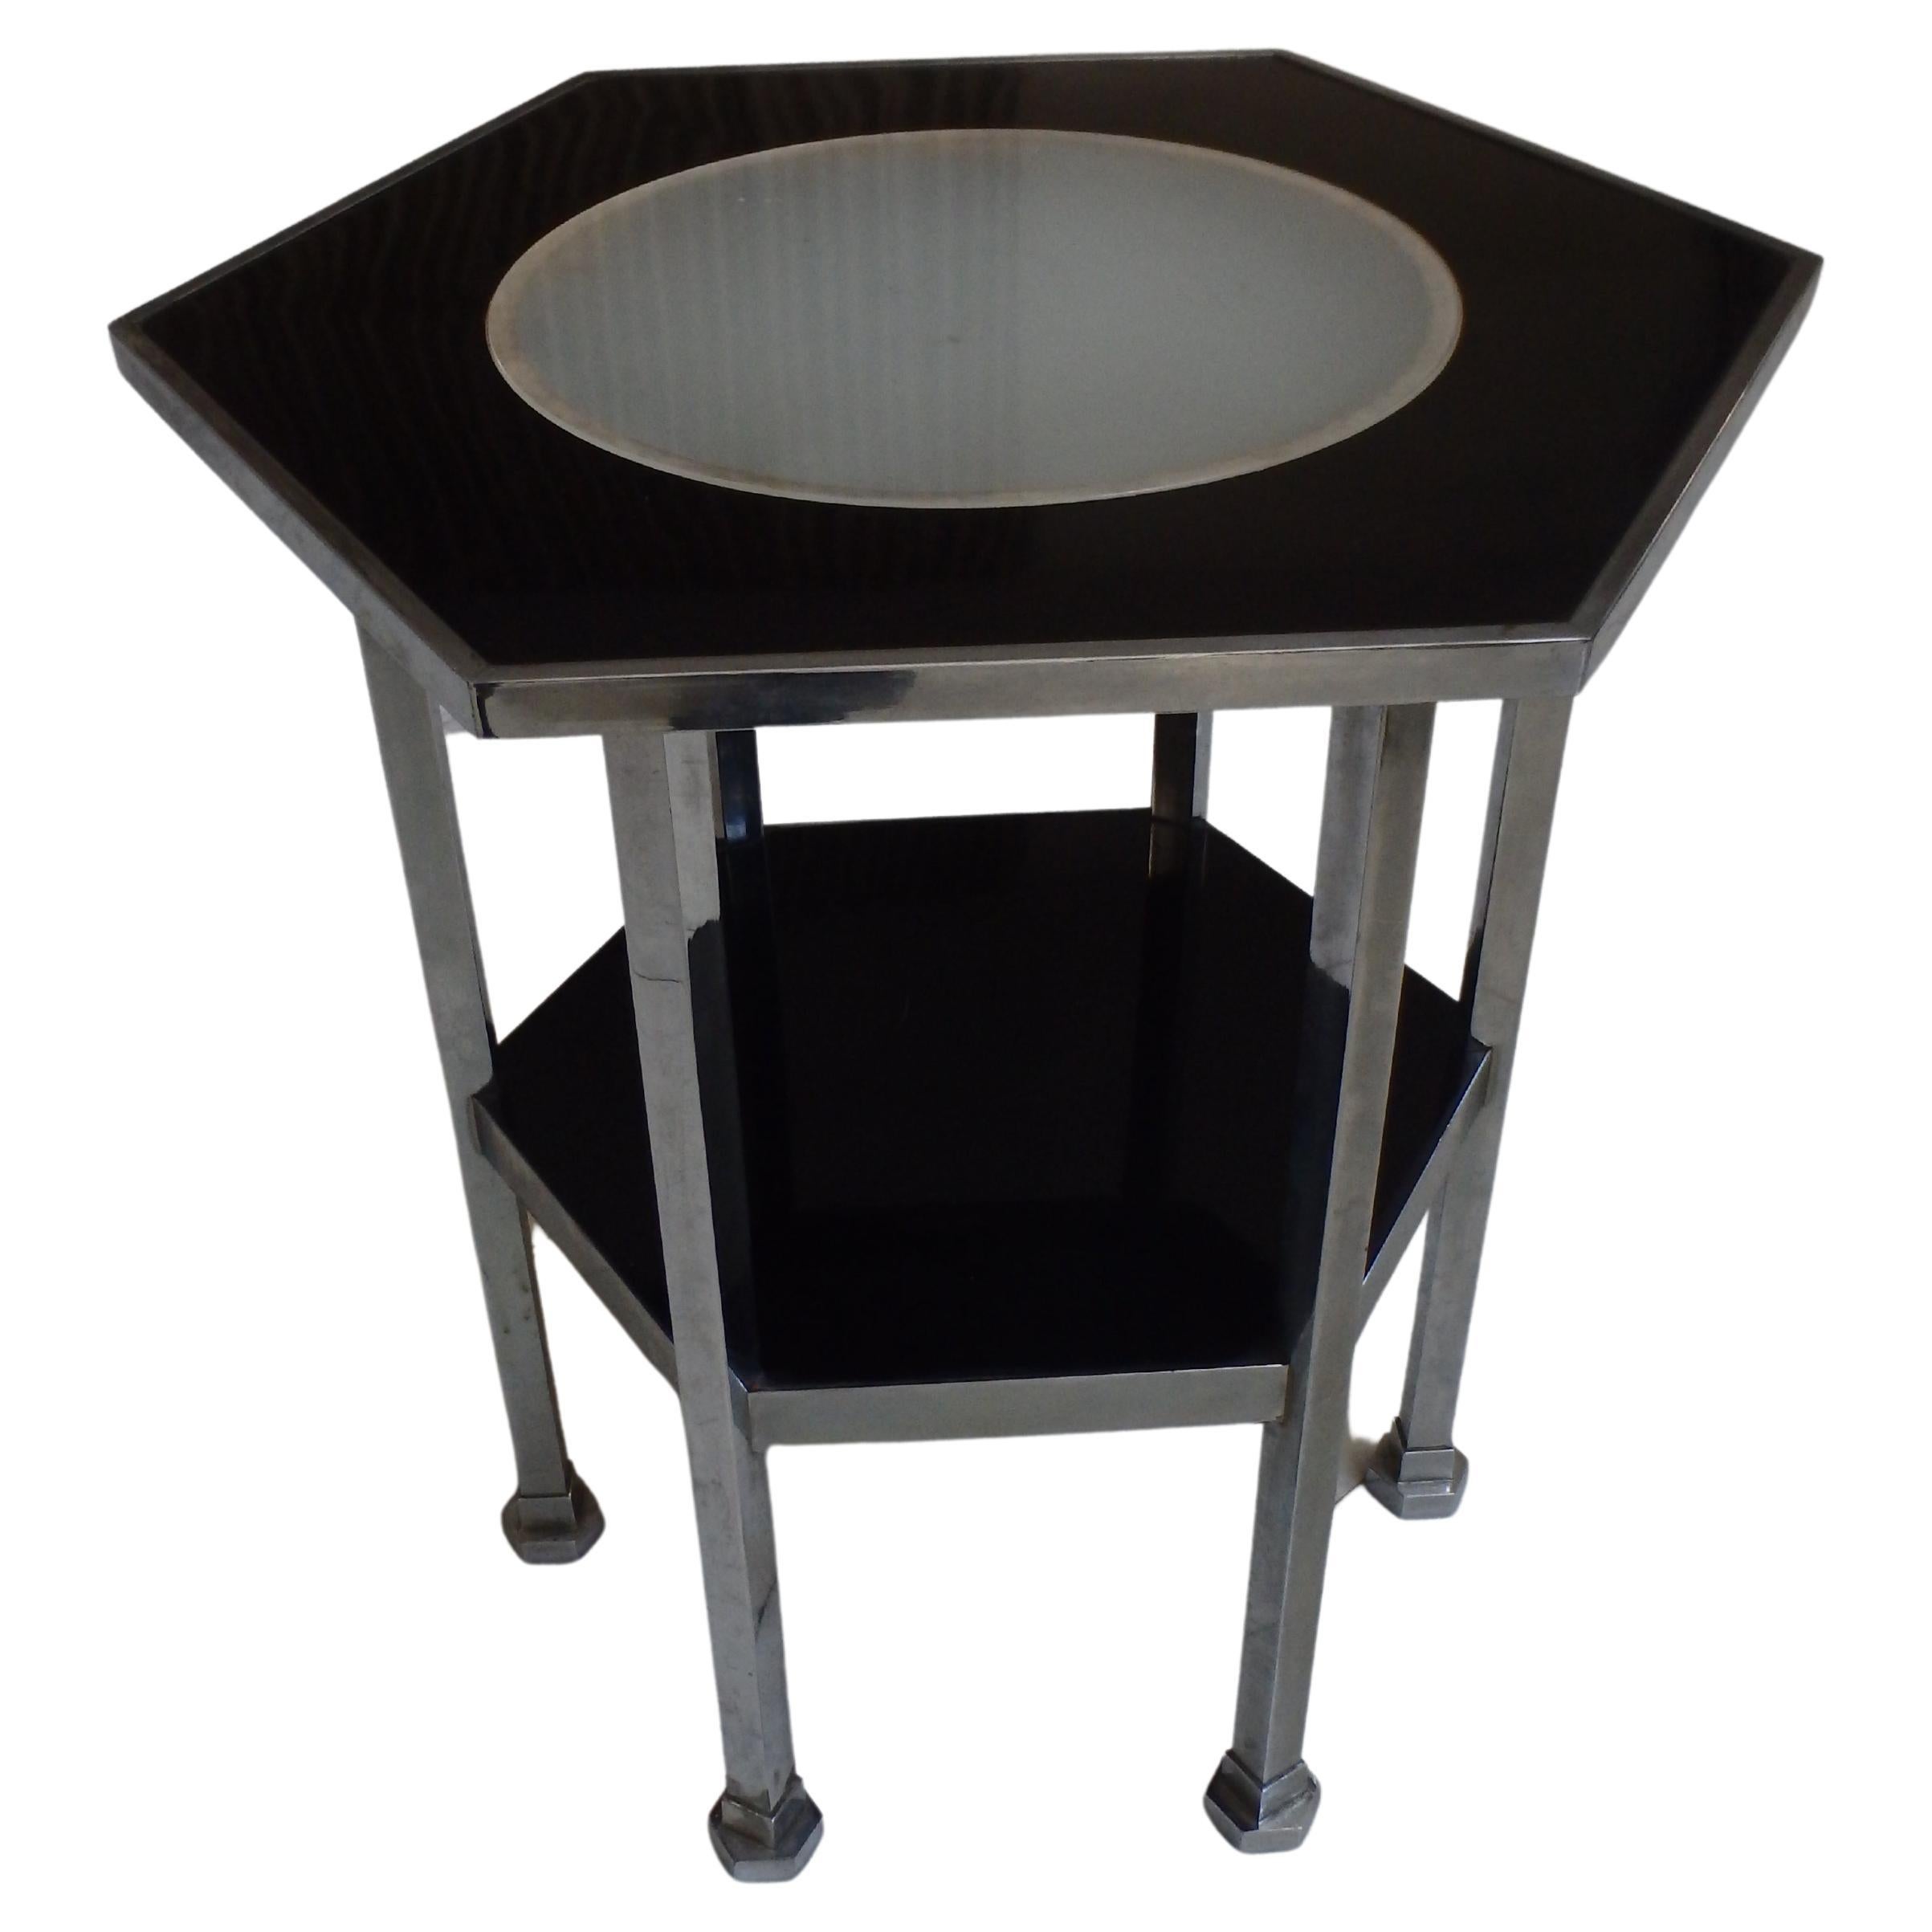 Bauhaus 2 Top Table with Light Inside Chrome and Black Bakelite Model "Sultane"